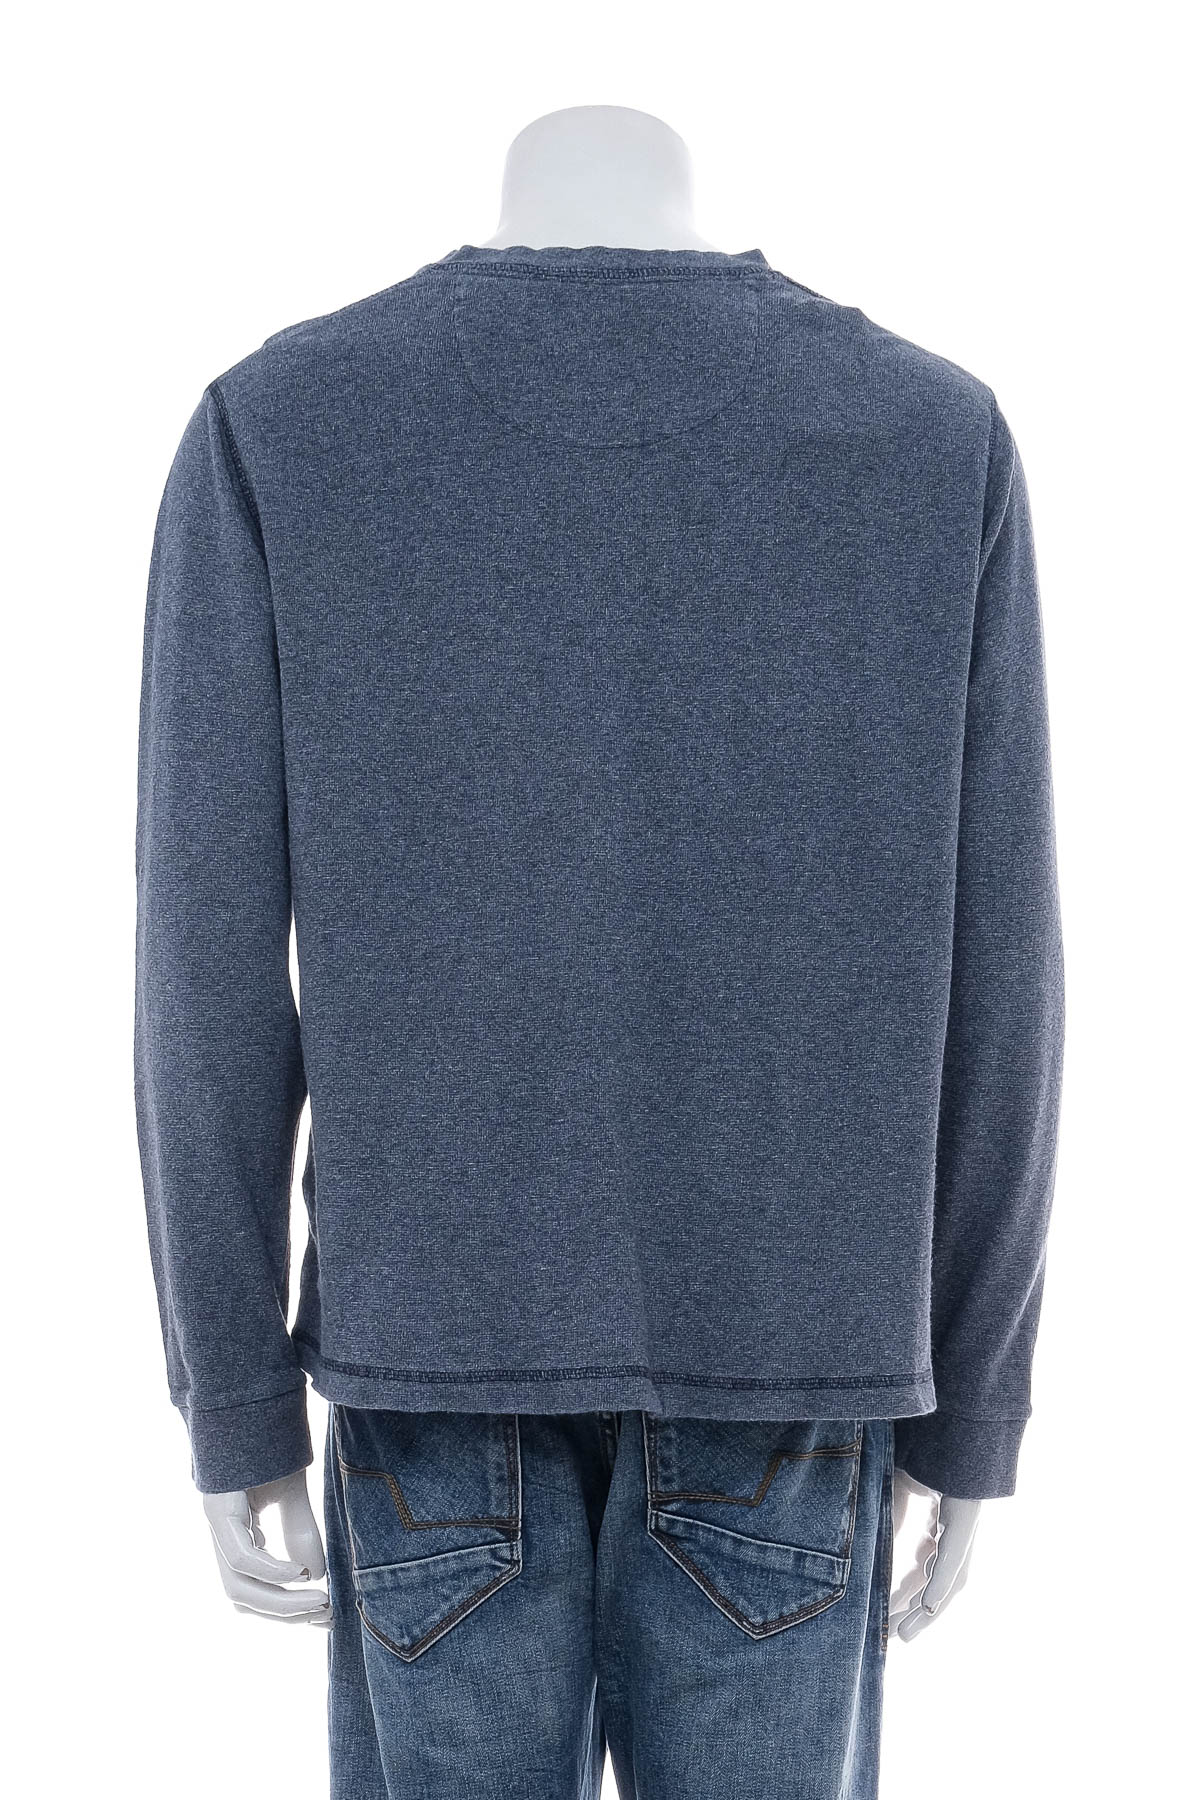 Men's sweater - LOGAN HILL - 1